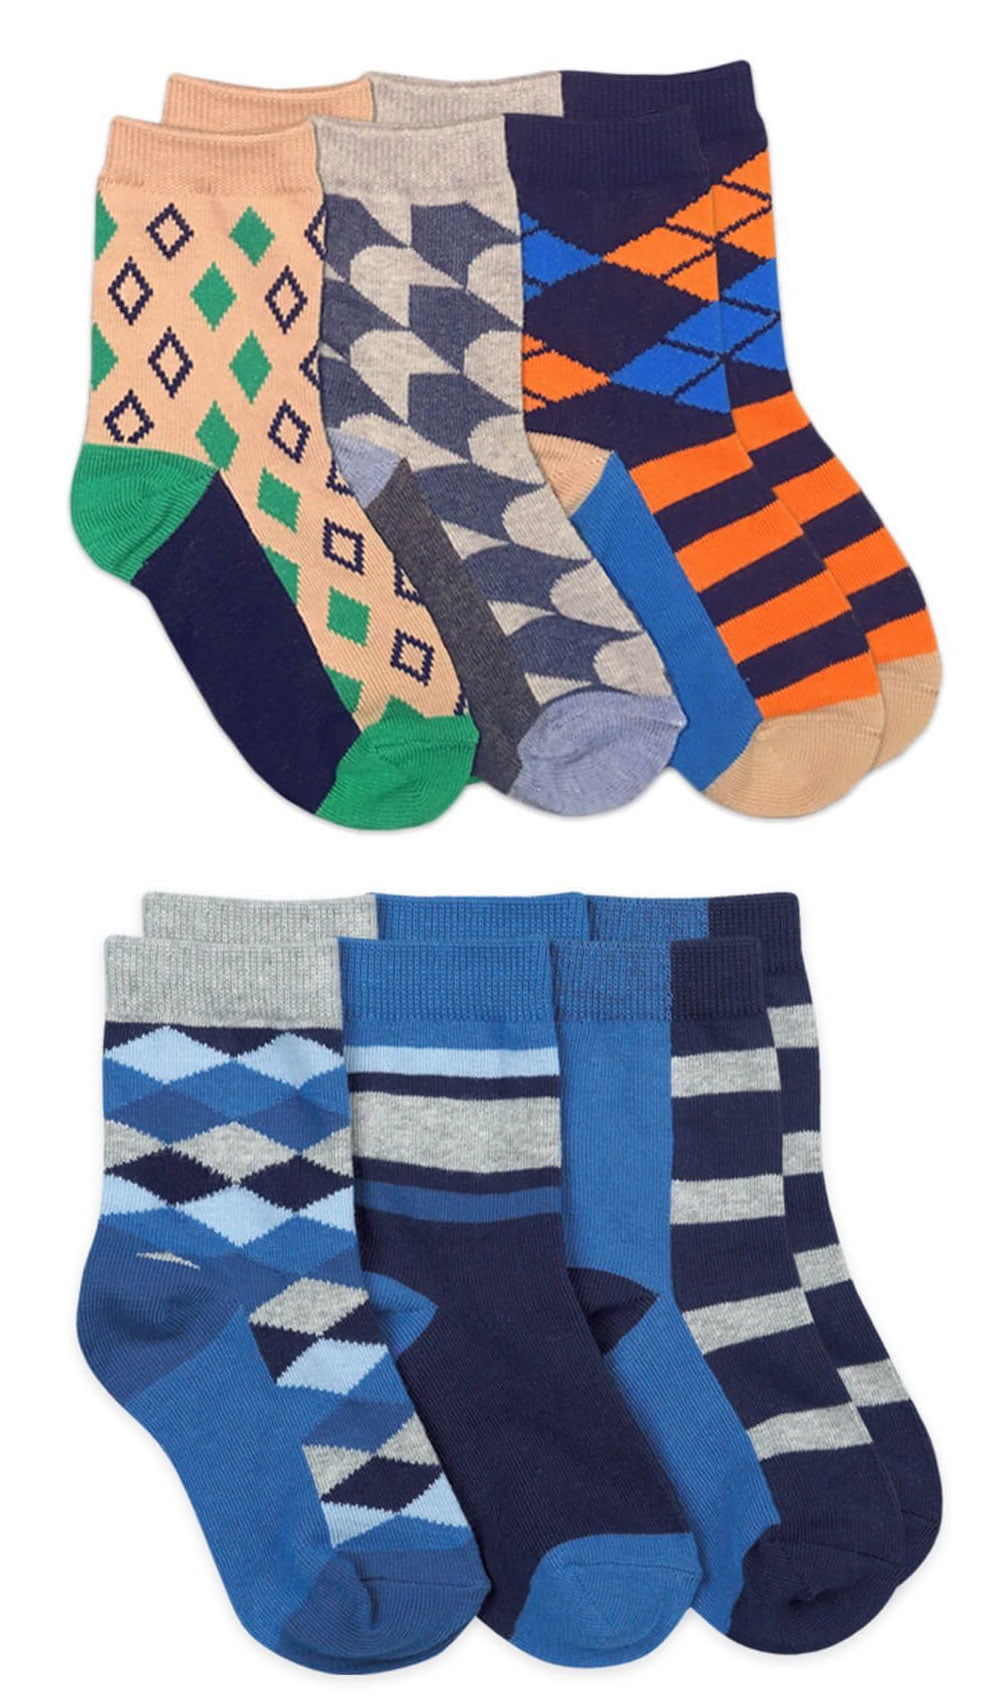 Triple M Plus Argyle Boys Dress socks 